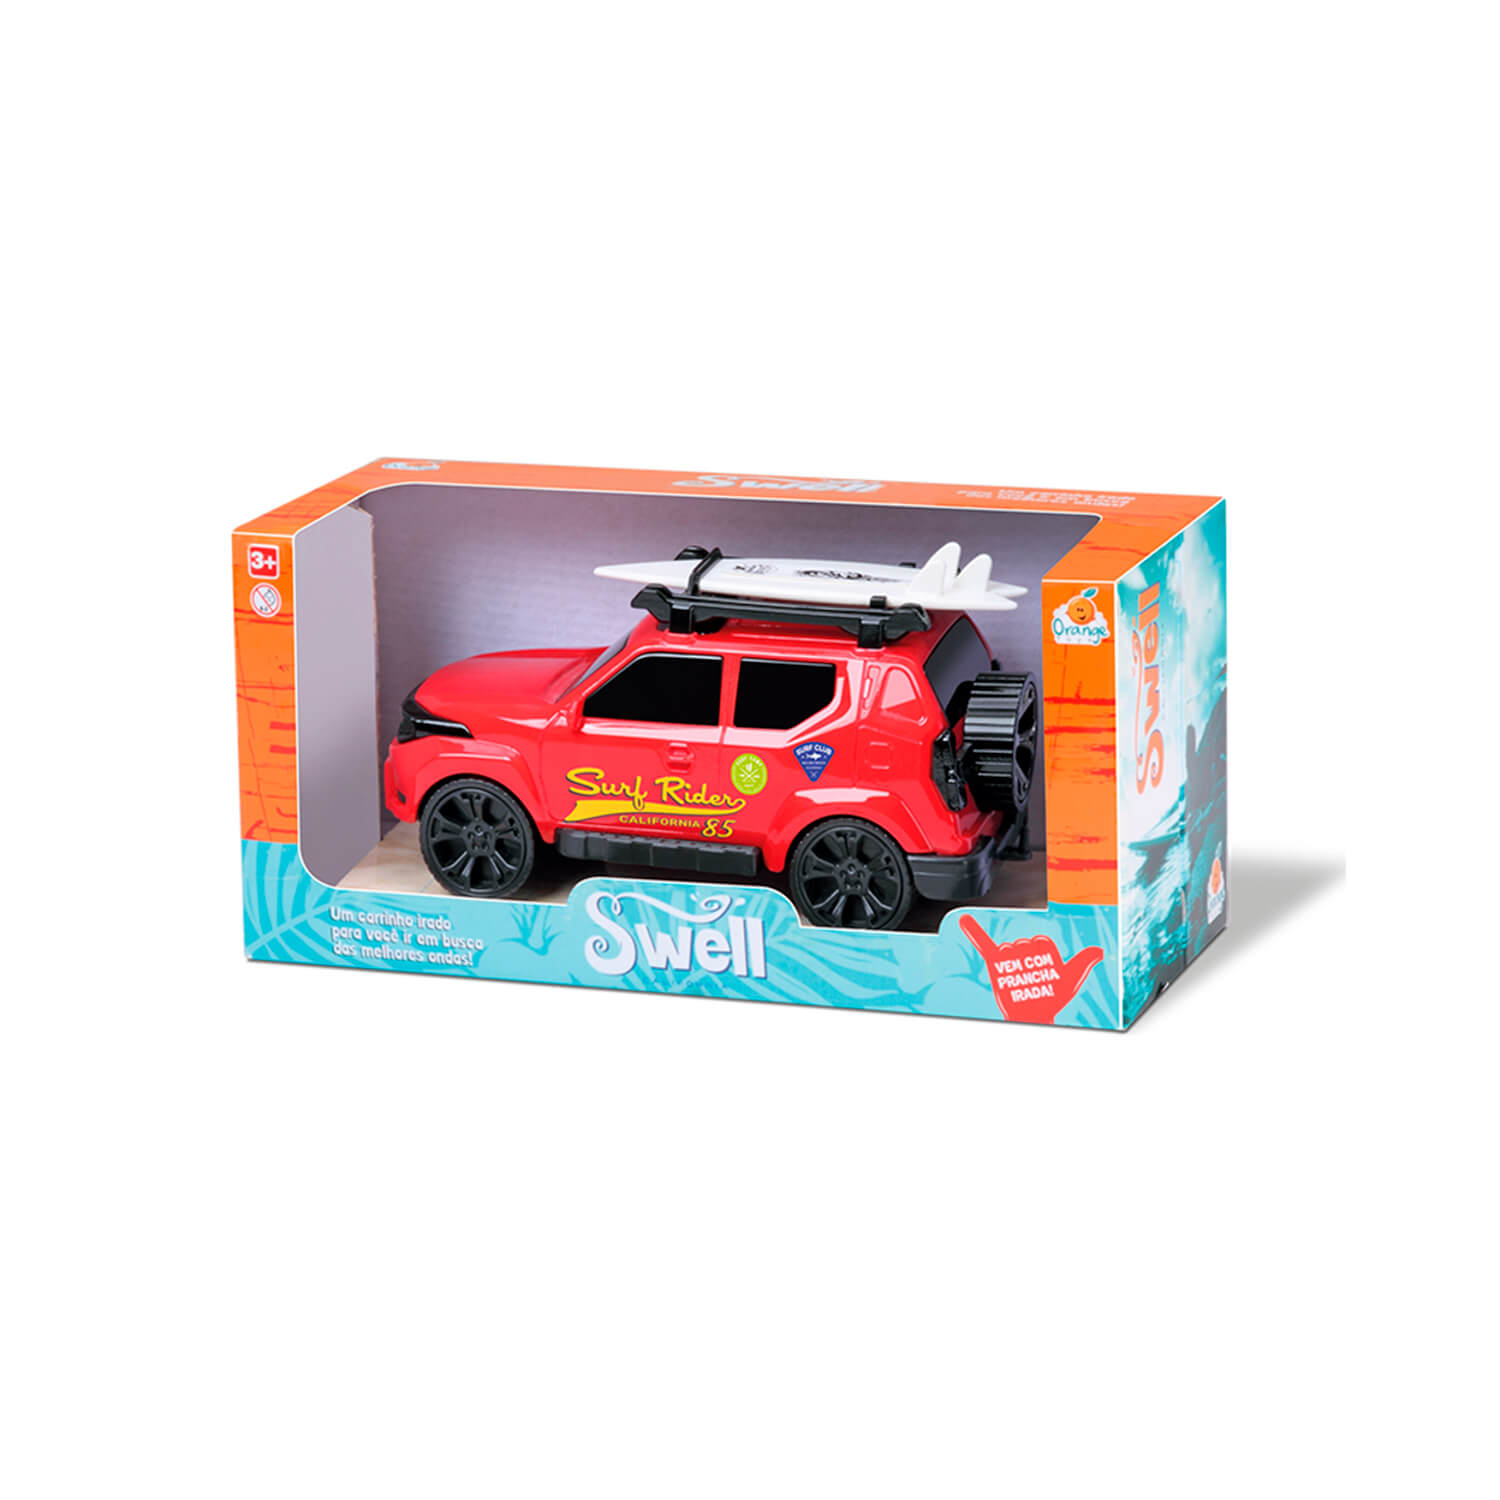 Lojas-TEM-Swell-Jeep-Orange-Toys